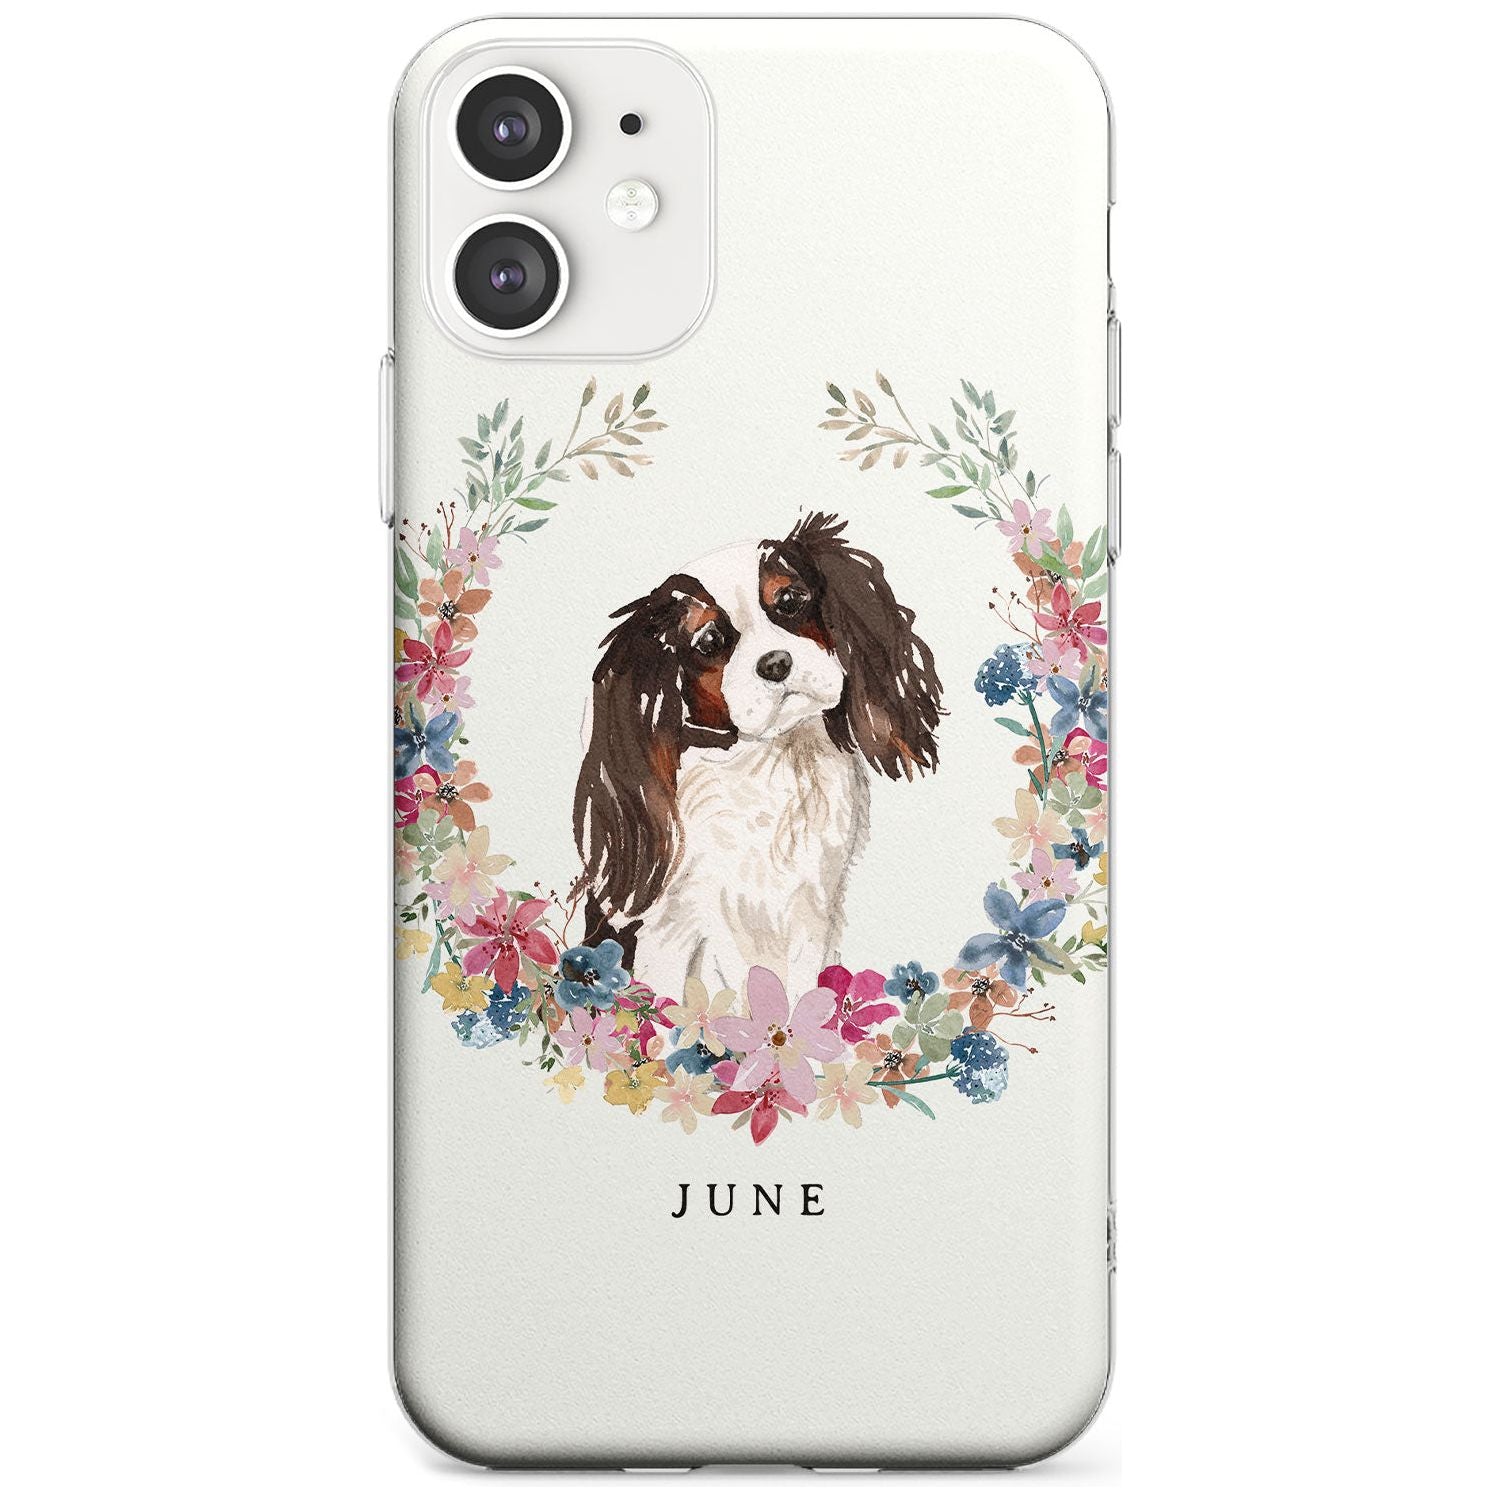 Tri Coloured King Charles Watercolour Dog Portrait Slim TPU Phone Case for iPhone 11